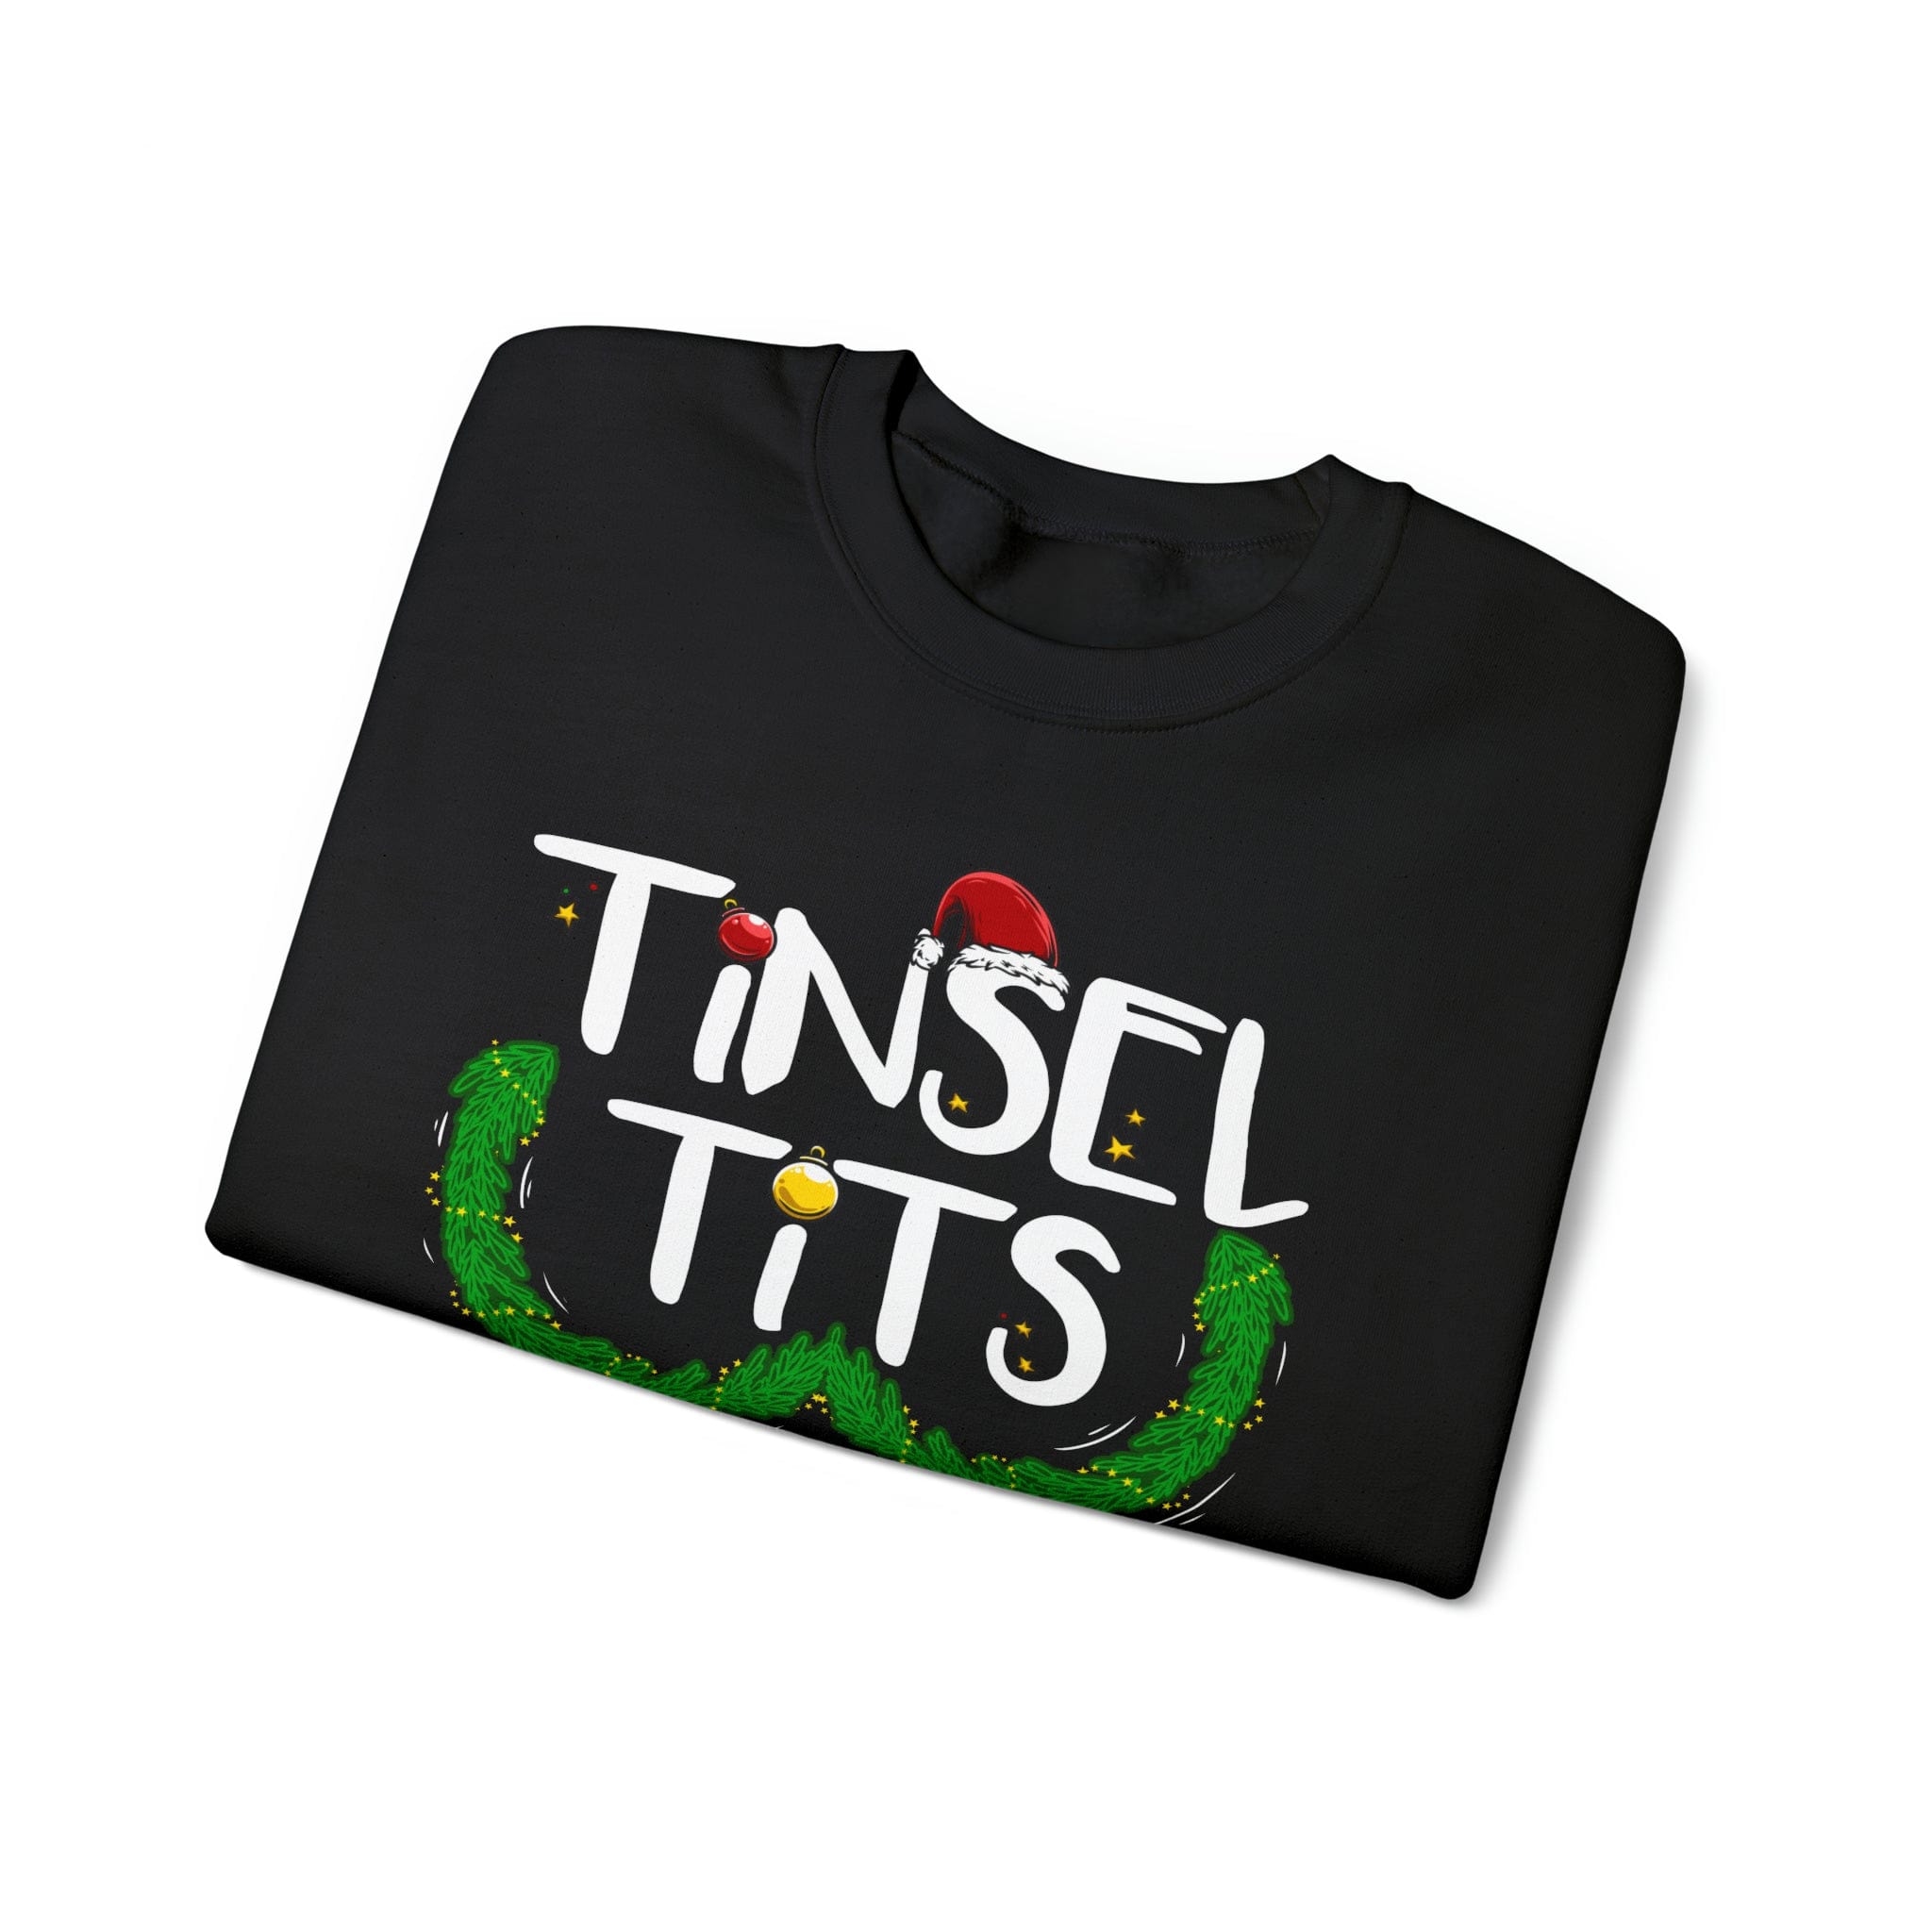 Tinsel Tits Sweatshirt 2023